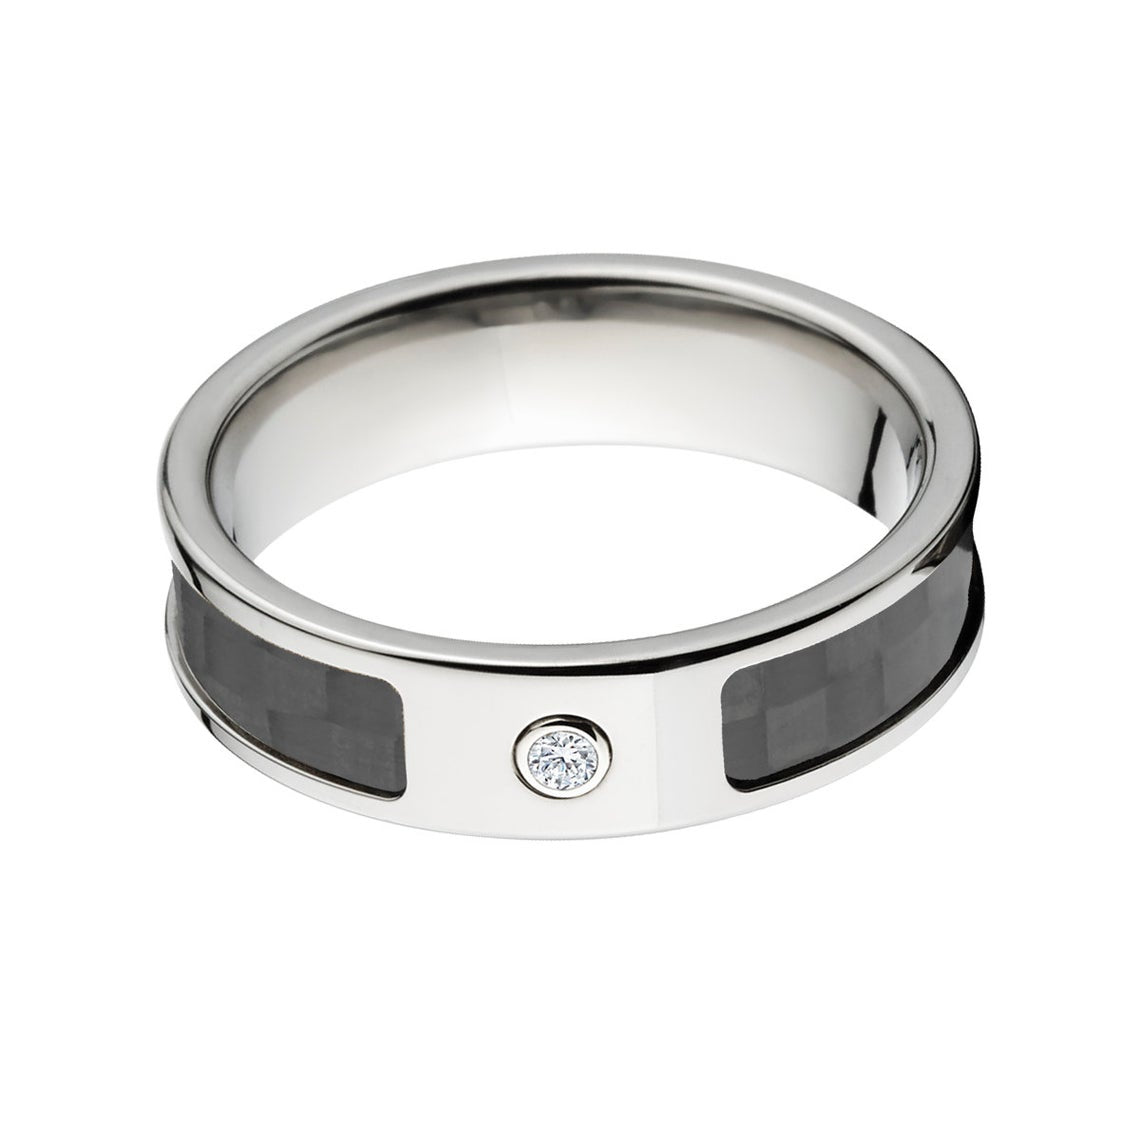 6mm wide titanium ring with black carbon fiber inlay and bezel set diamond